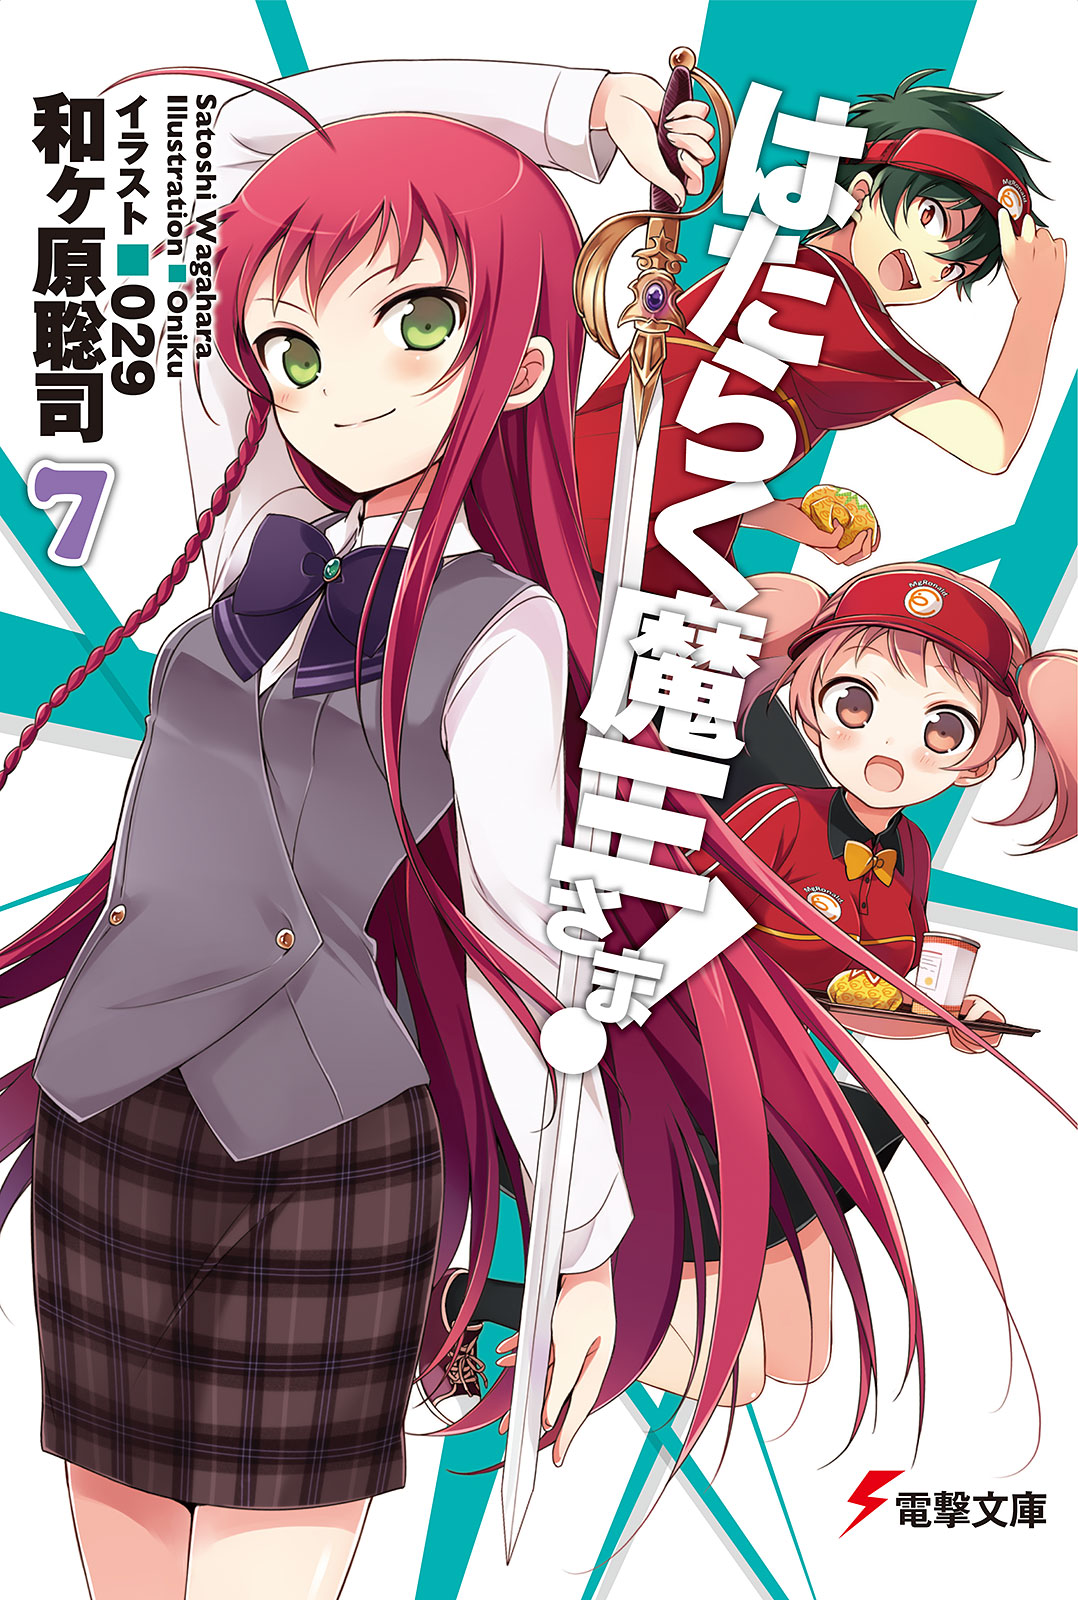 First Episode Reviews of 2013 Spring Anime!!  Hataraku maou sama, Anime, Devil  part timer